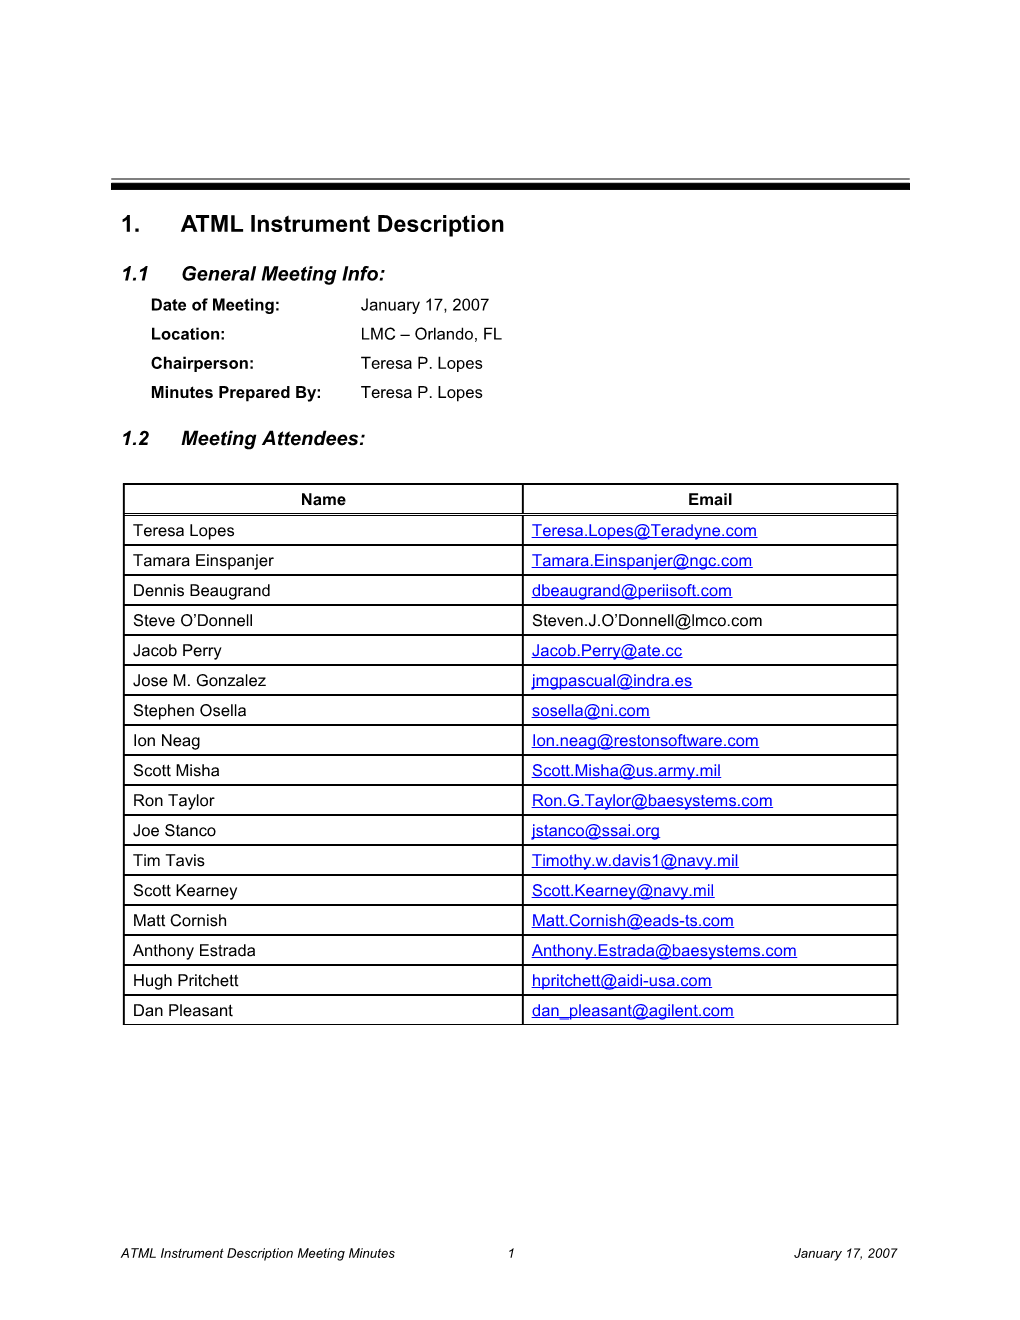 ATML Instrument Description Minutes